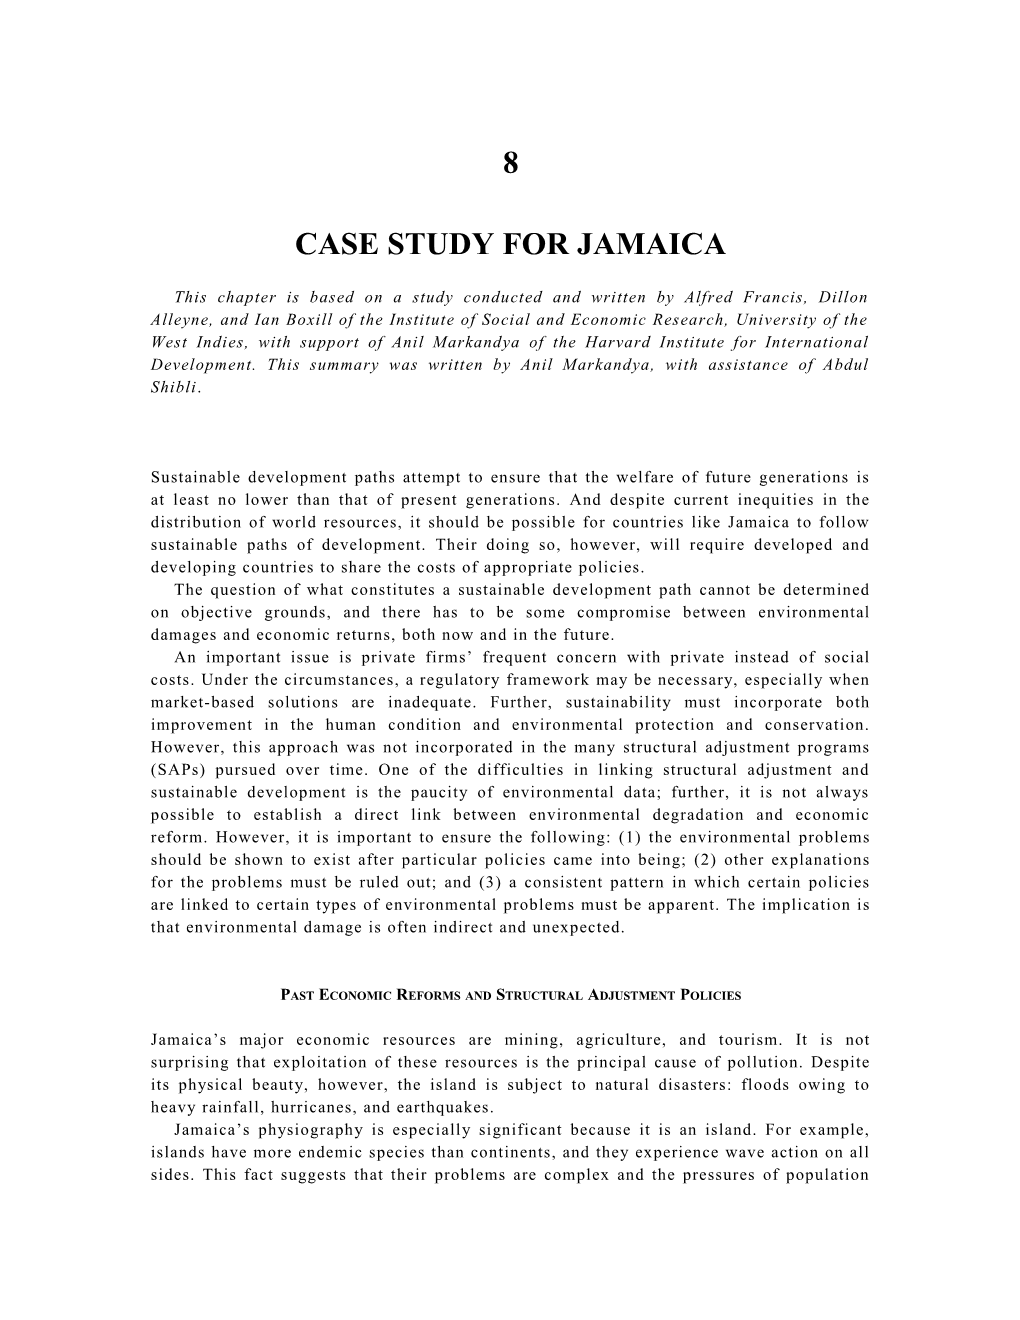 Case Study for Jamaica